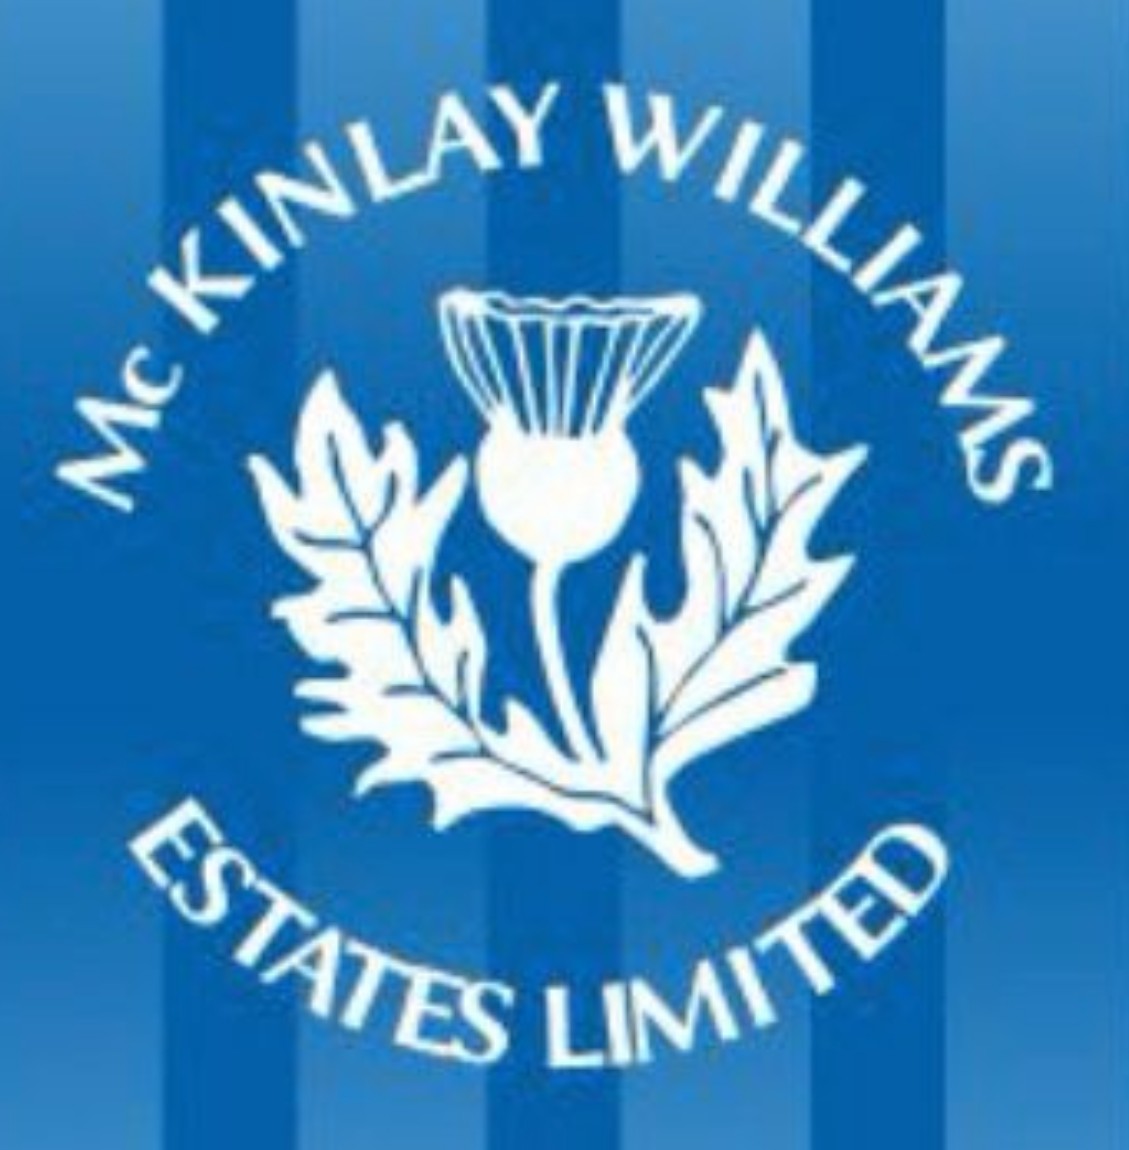 McKinley Williams Estate Ltd